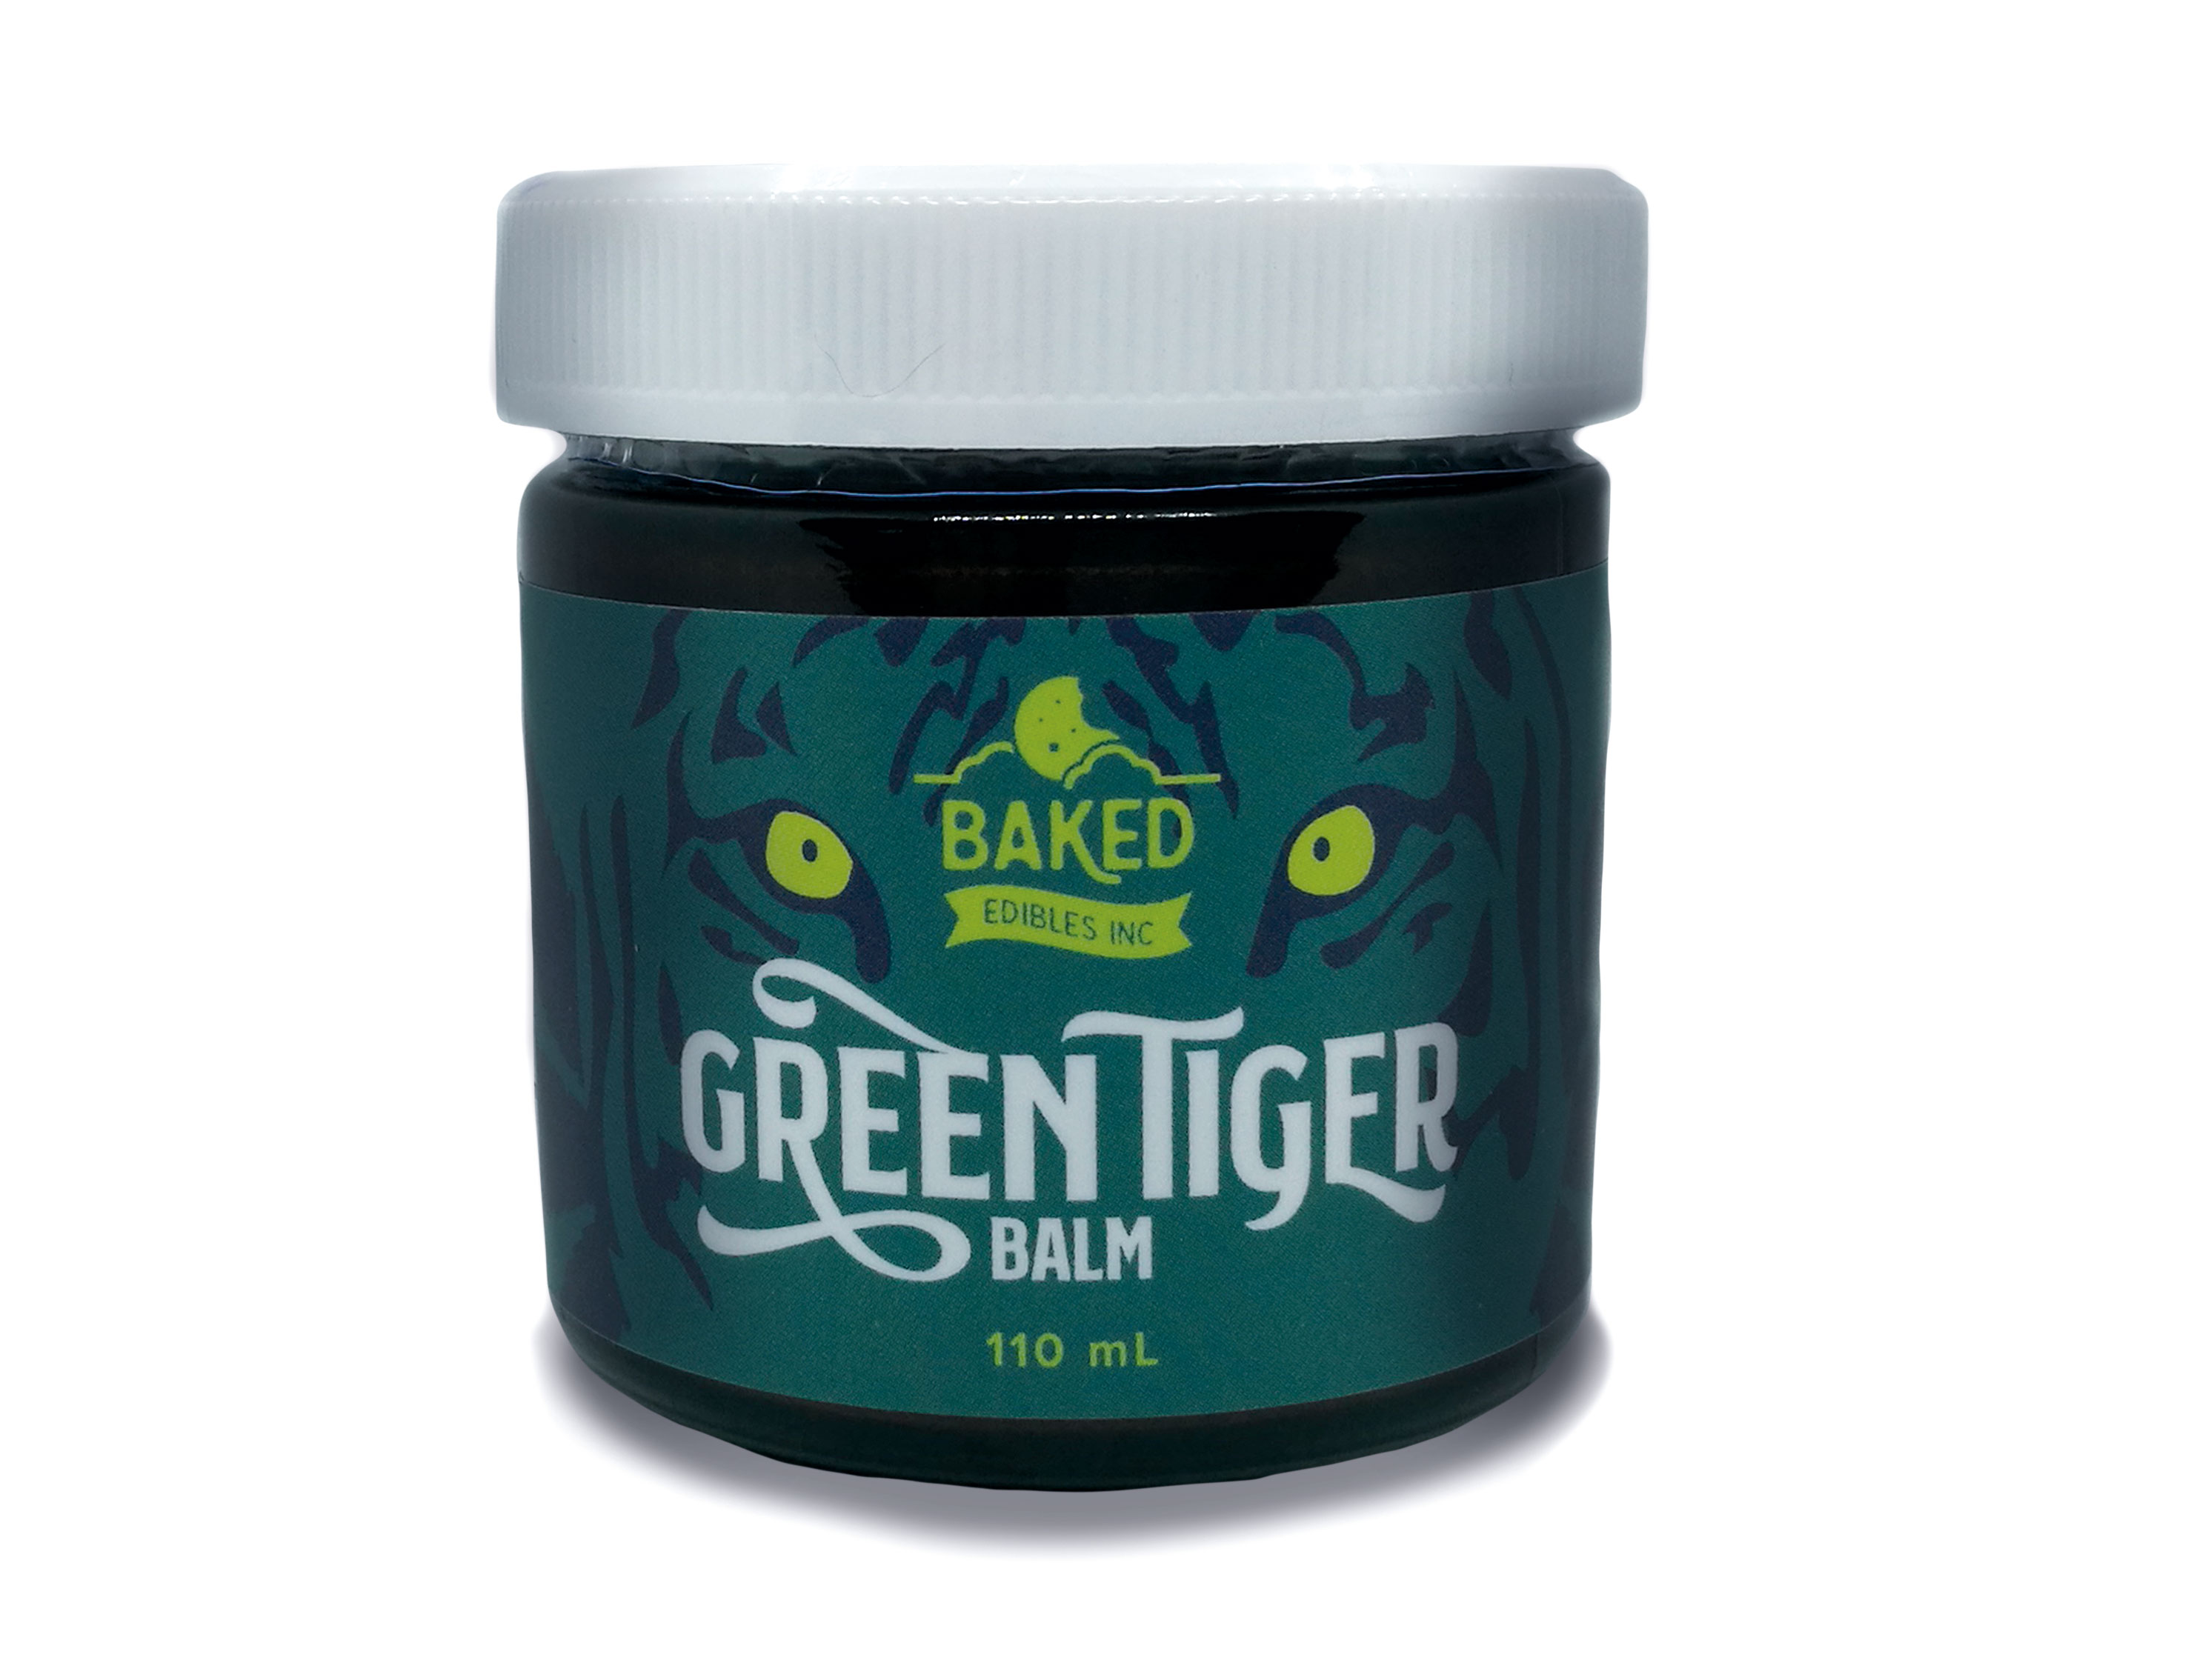 Green Tiger Balm